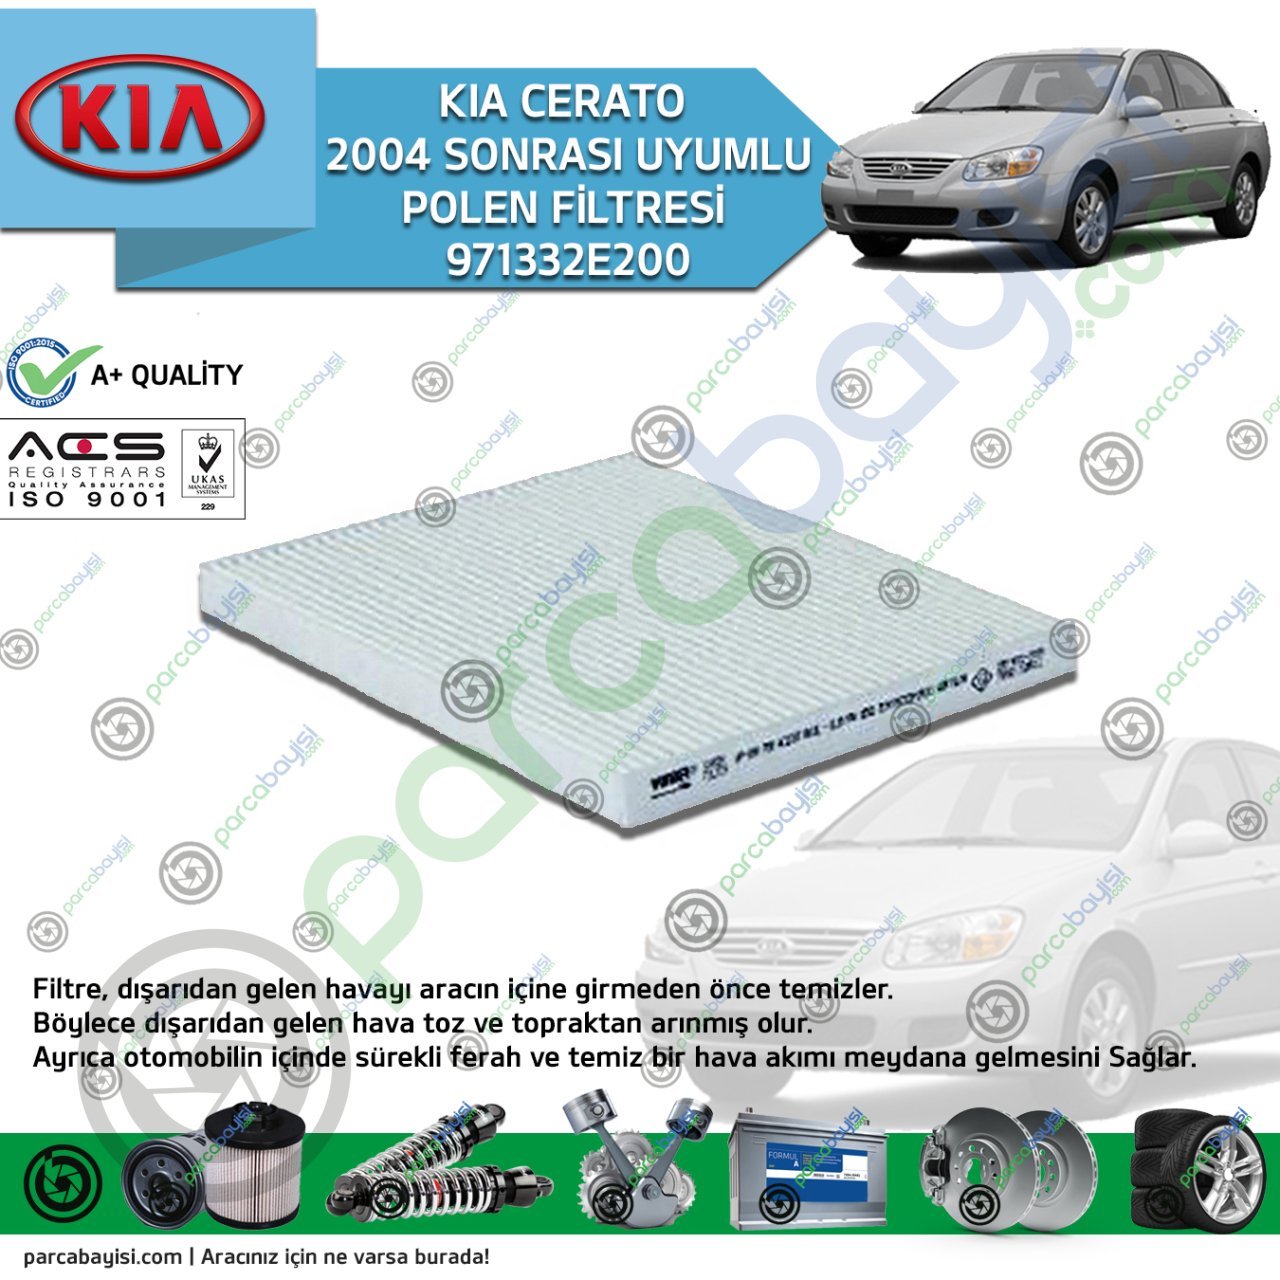 Kia Cerato-Rio Polen Filtresi Uyumlu | K020P87901F200A